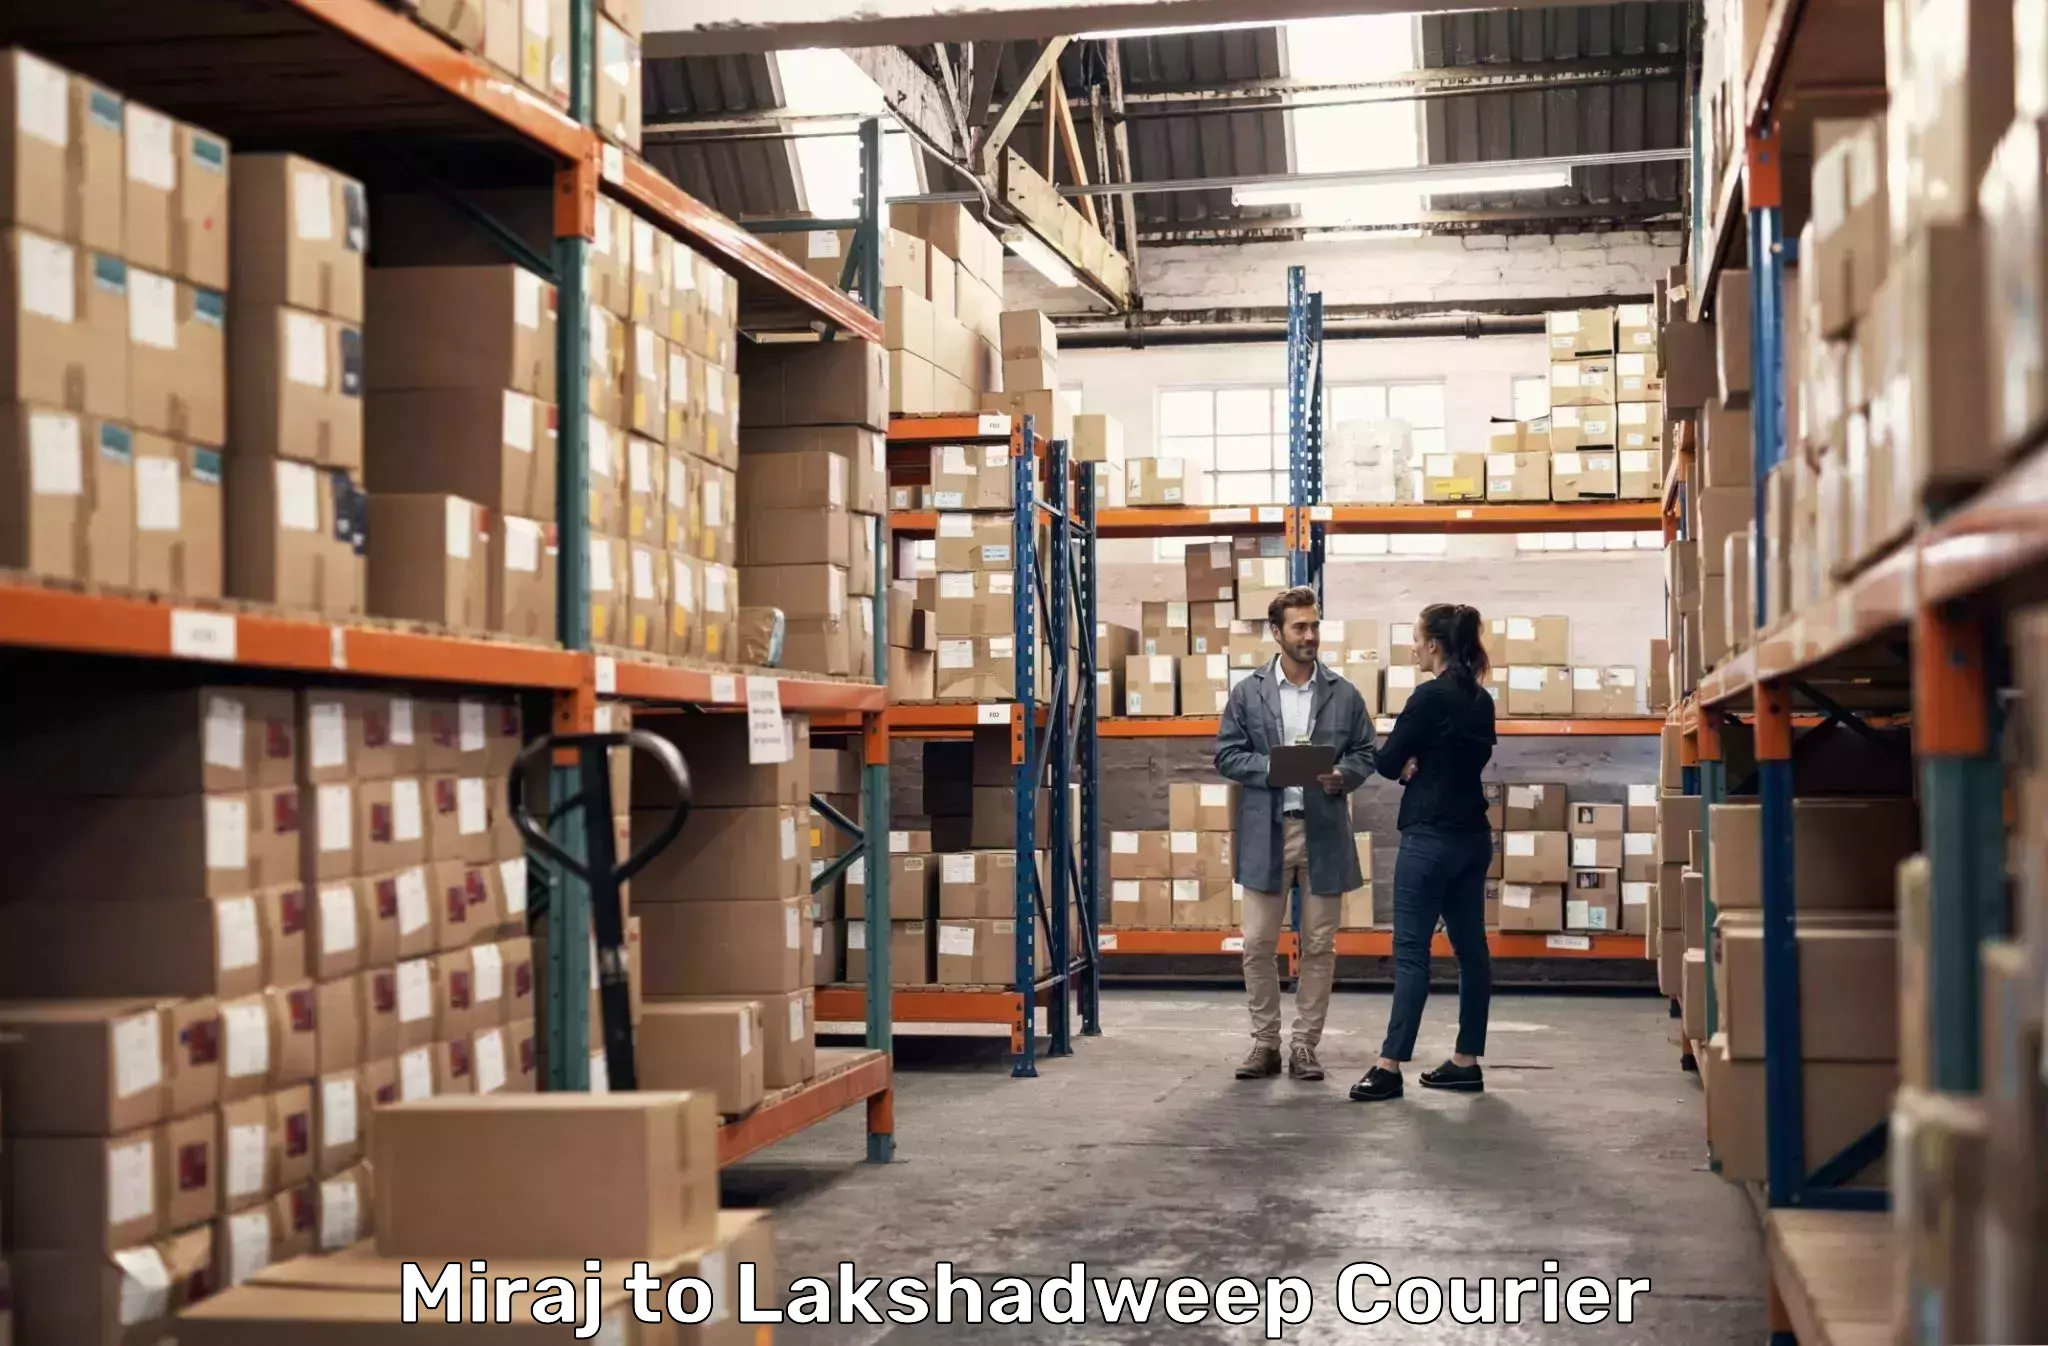 Urgent courier needs Miraj to Lakshadweep